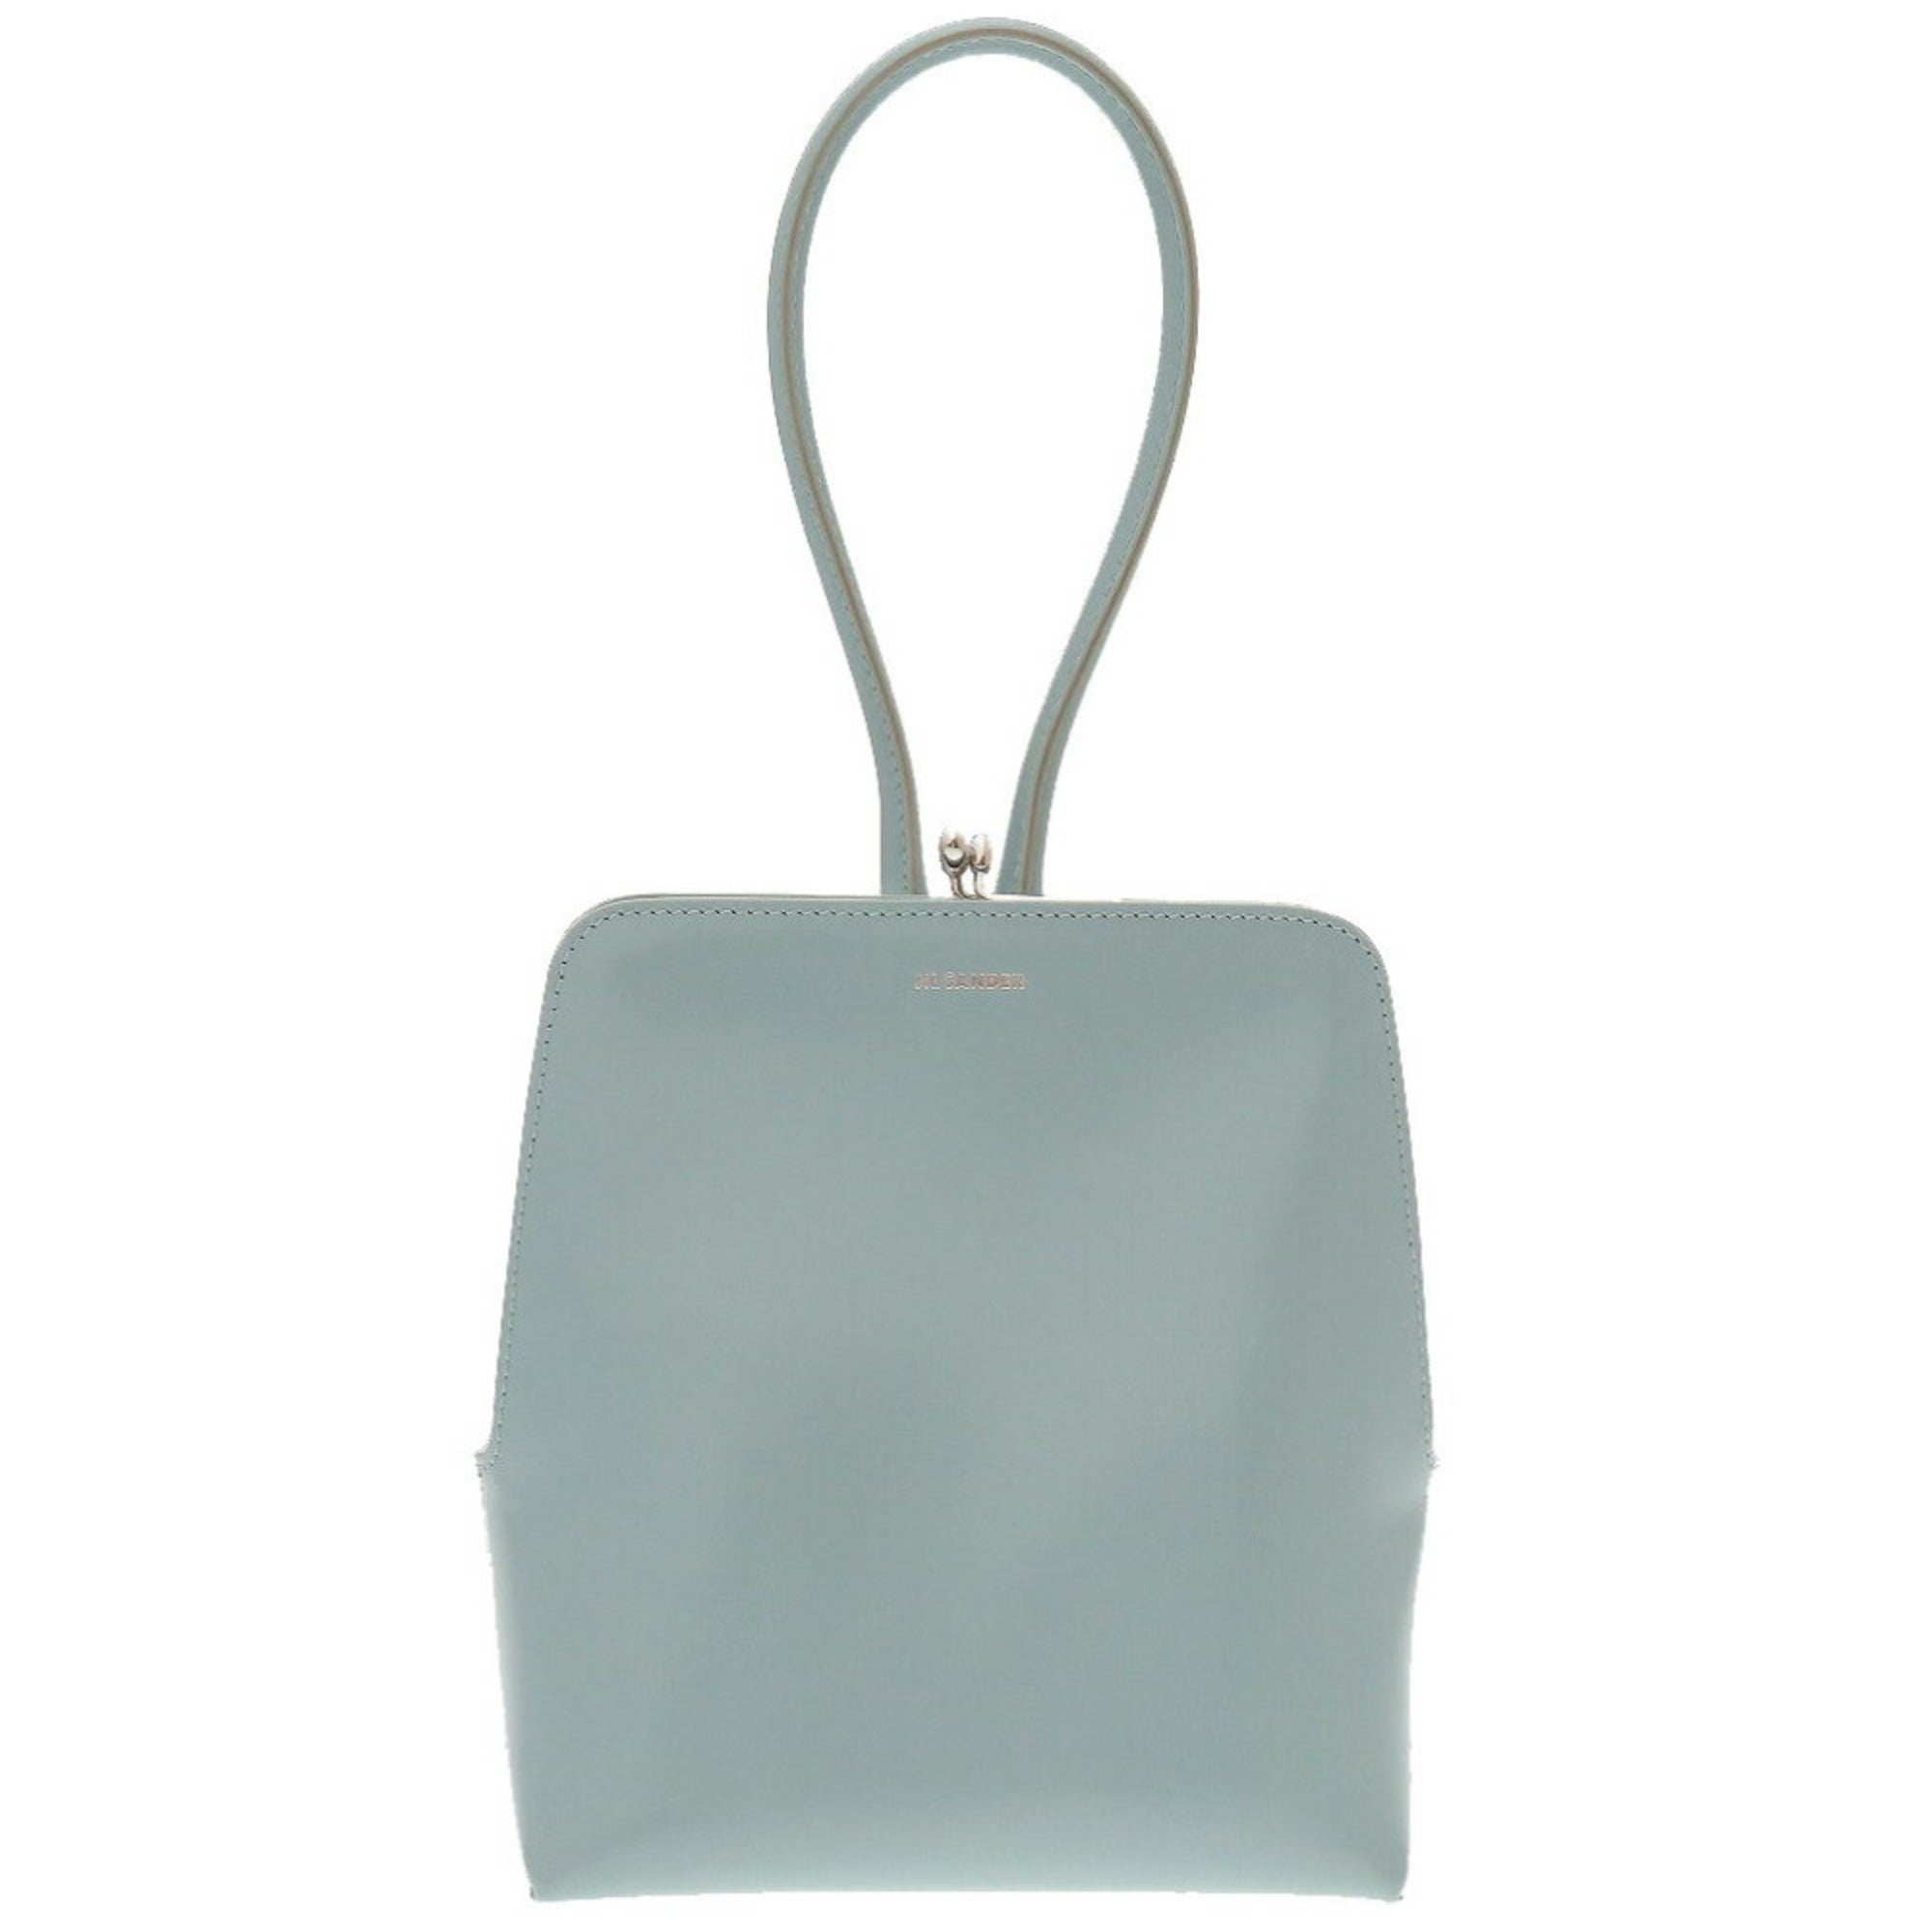 Goji Square Small JSWS856383 Leather Light Blue Handbag